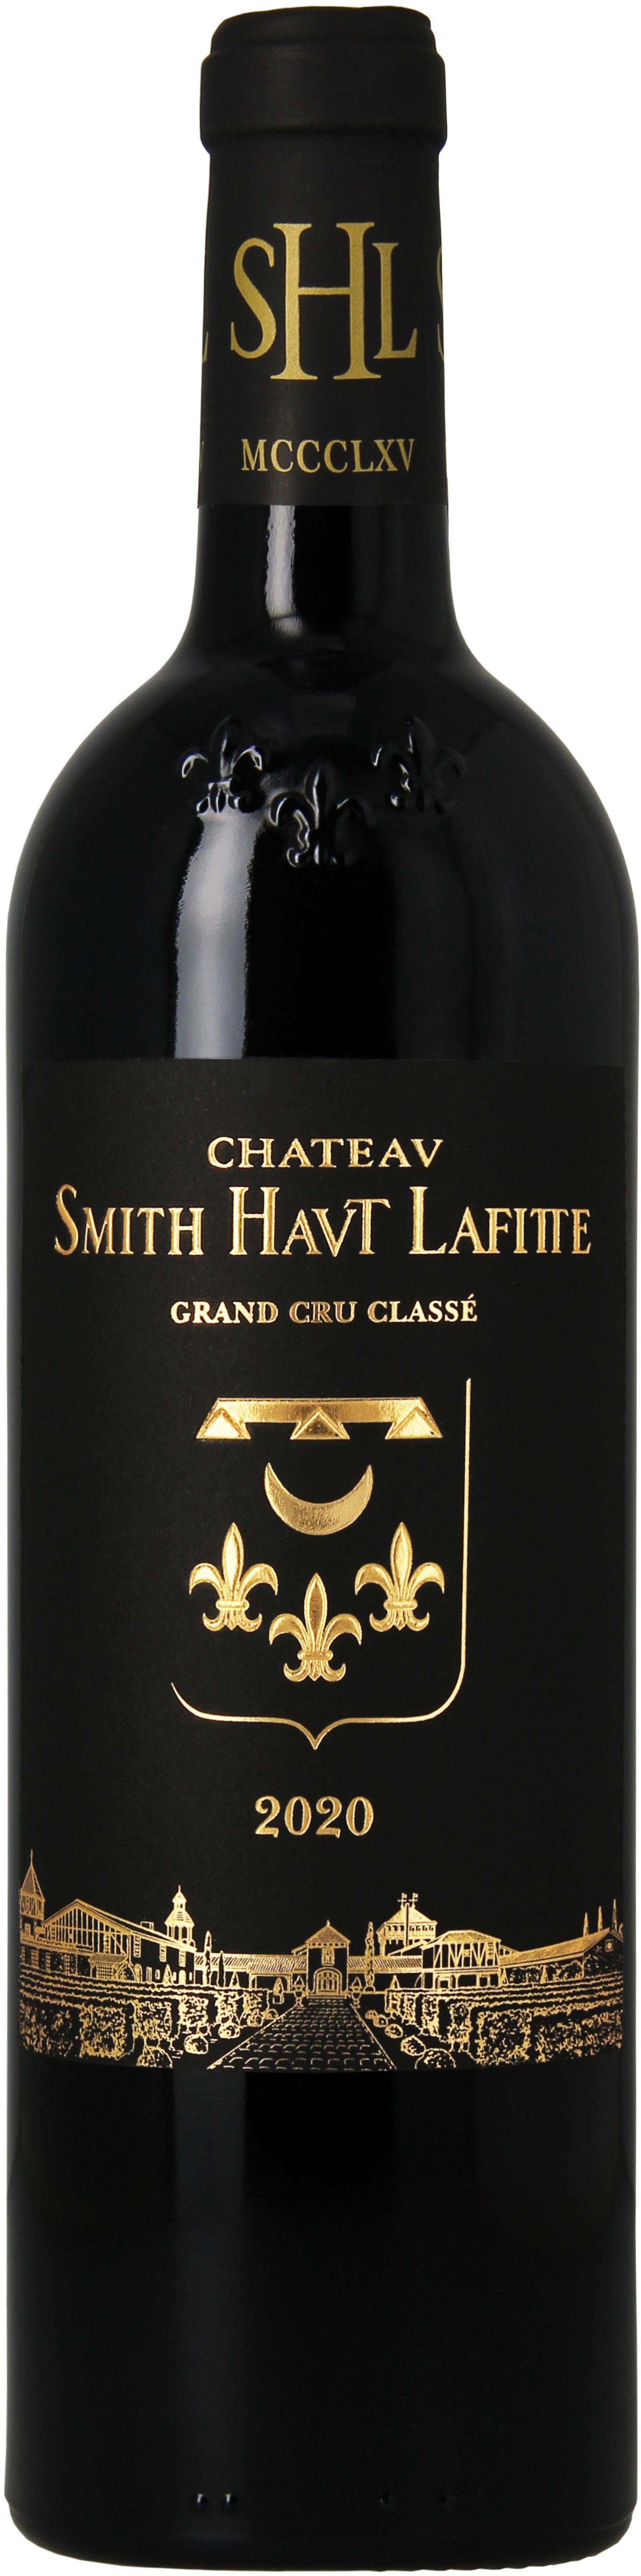 2020 Château Smith Haut Lafitte